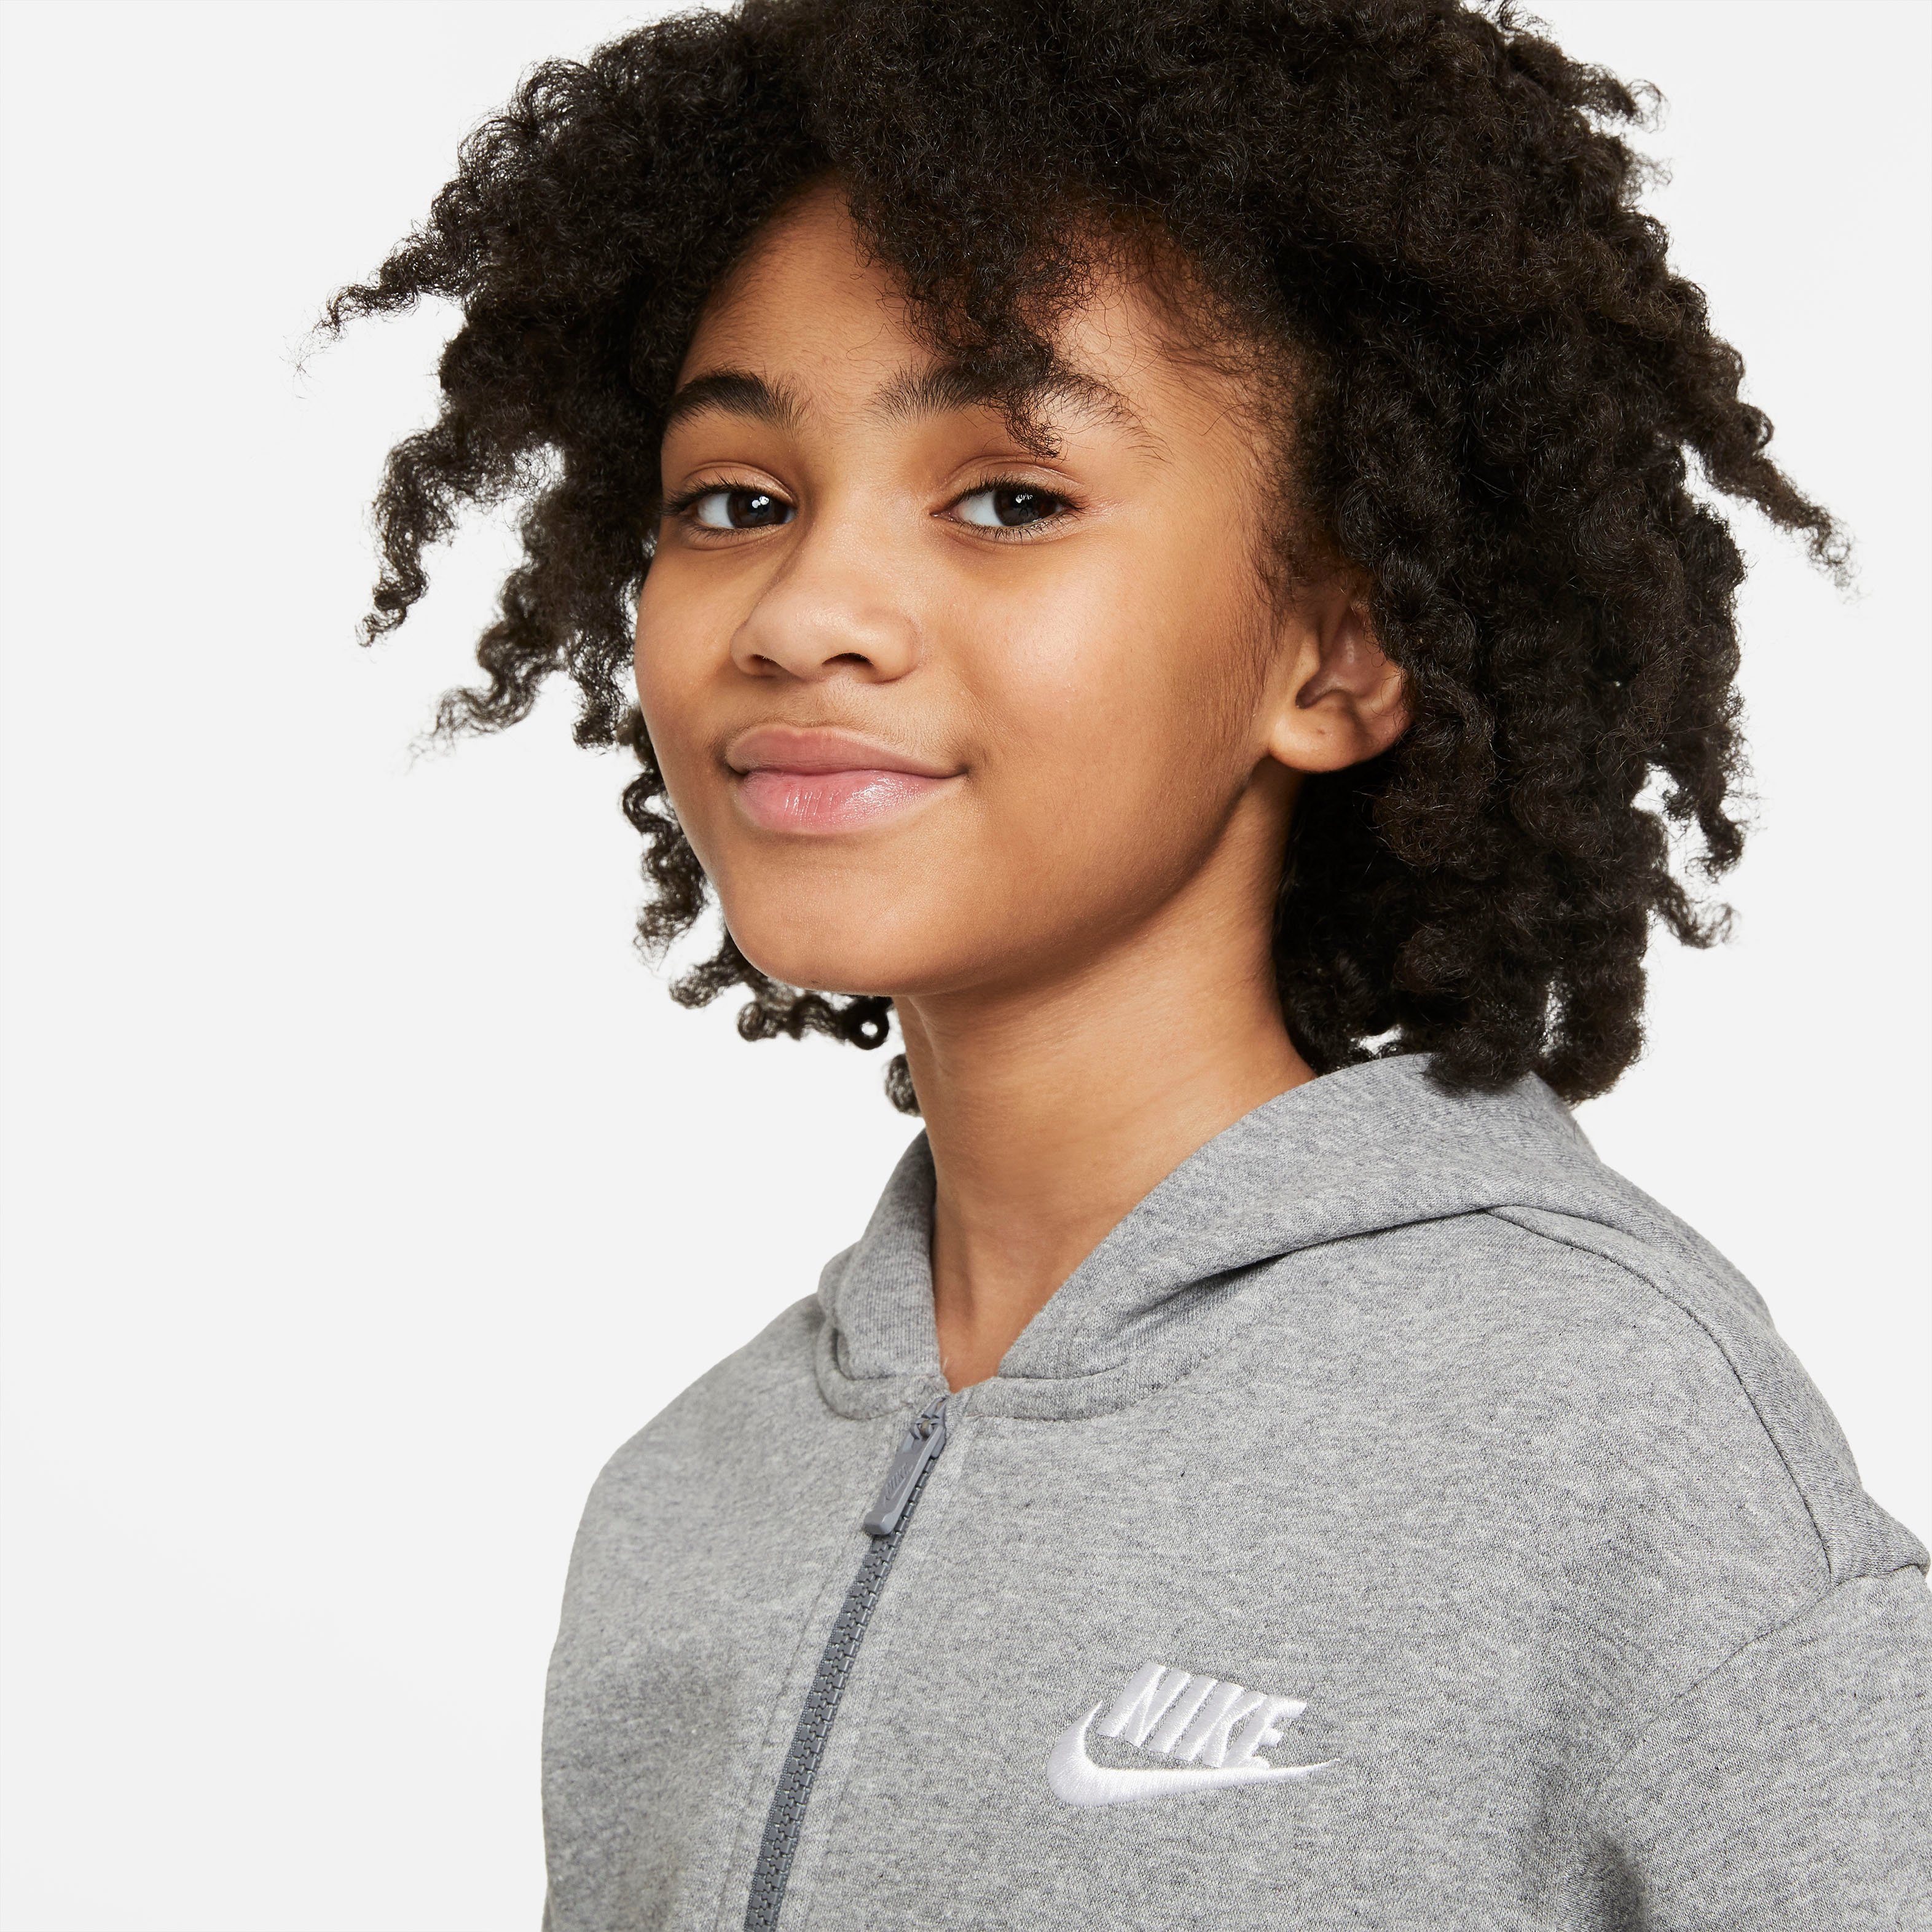 Nike Sportswear (Girls) Big Kids' Kapuzensweatjacke Fleece Club Hoodie Full-Zip grau